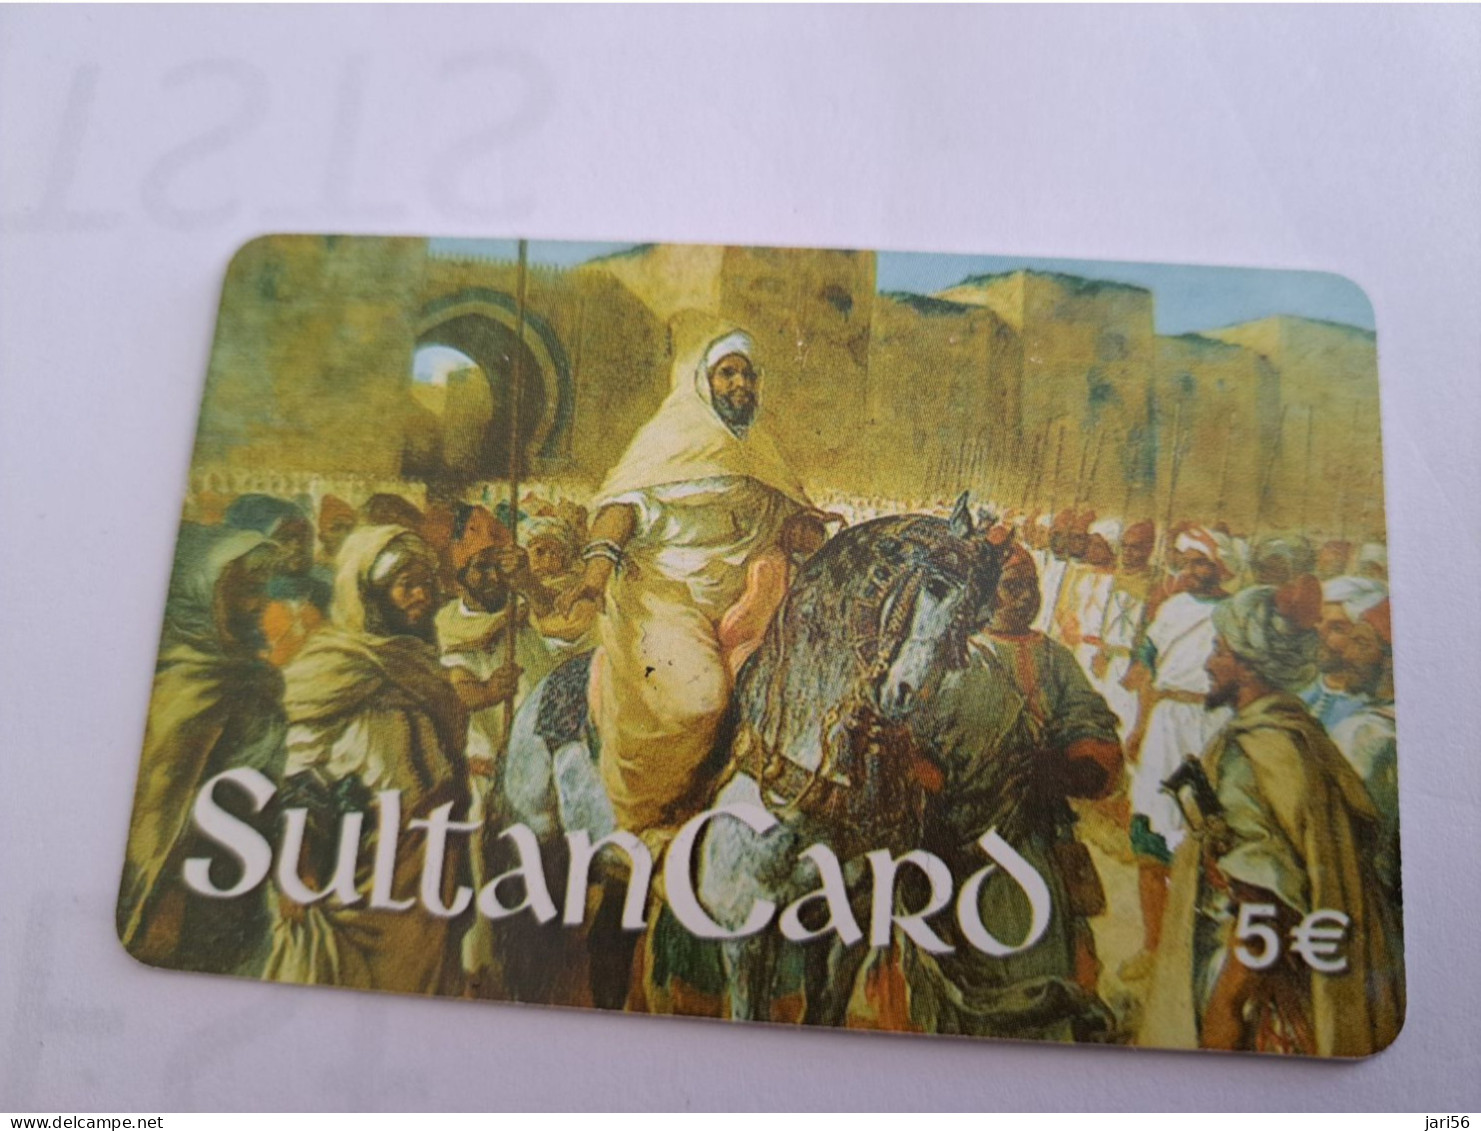 DUITSLAND/GERMANY  € 5,- / SULTANCARD/ MAN ON HORSE/ ARABIC    ON CARD        Fine Used  PREPAID  **16534** - [2] Prepaid